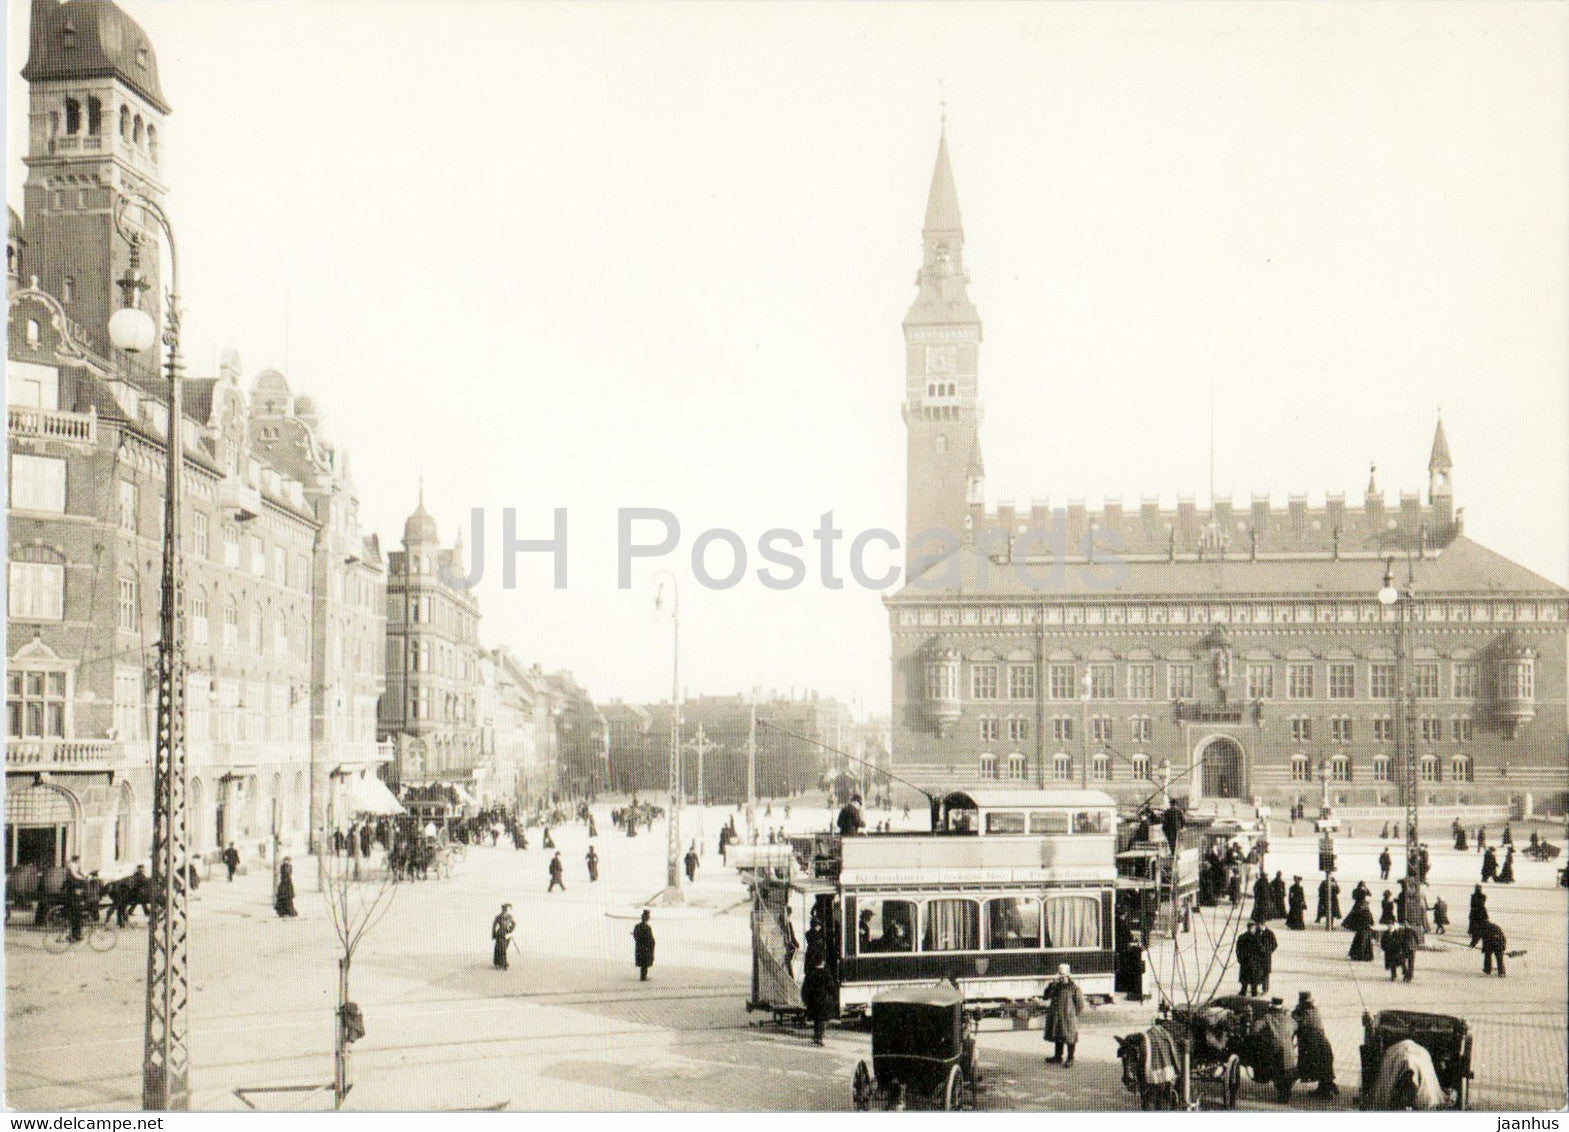 Copenhagen - Radhuspladsen - Town Hall Square in 1904 - tram - REPRODUCTION - Denmark - unused - JH Postcards